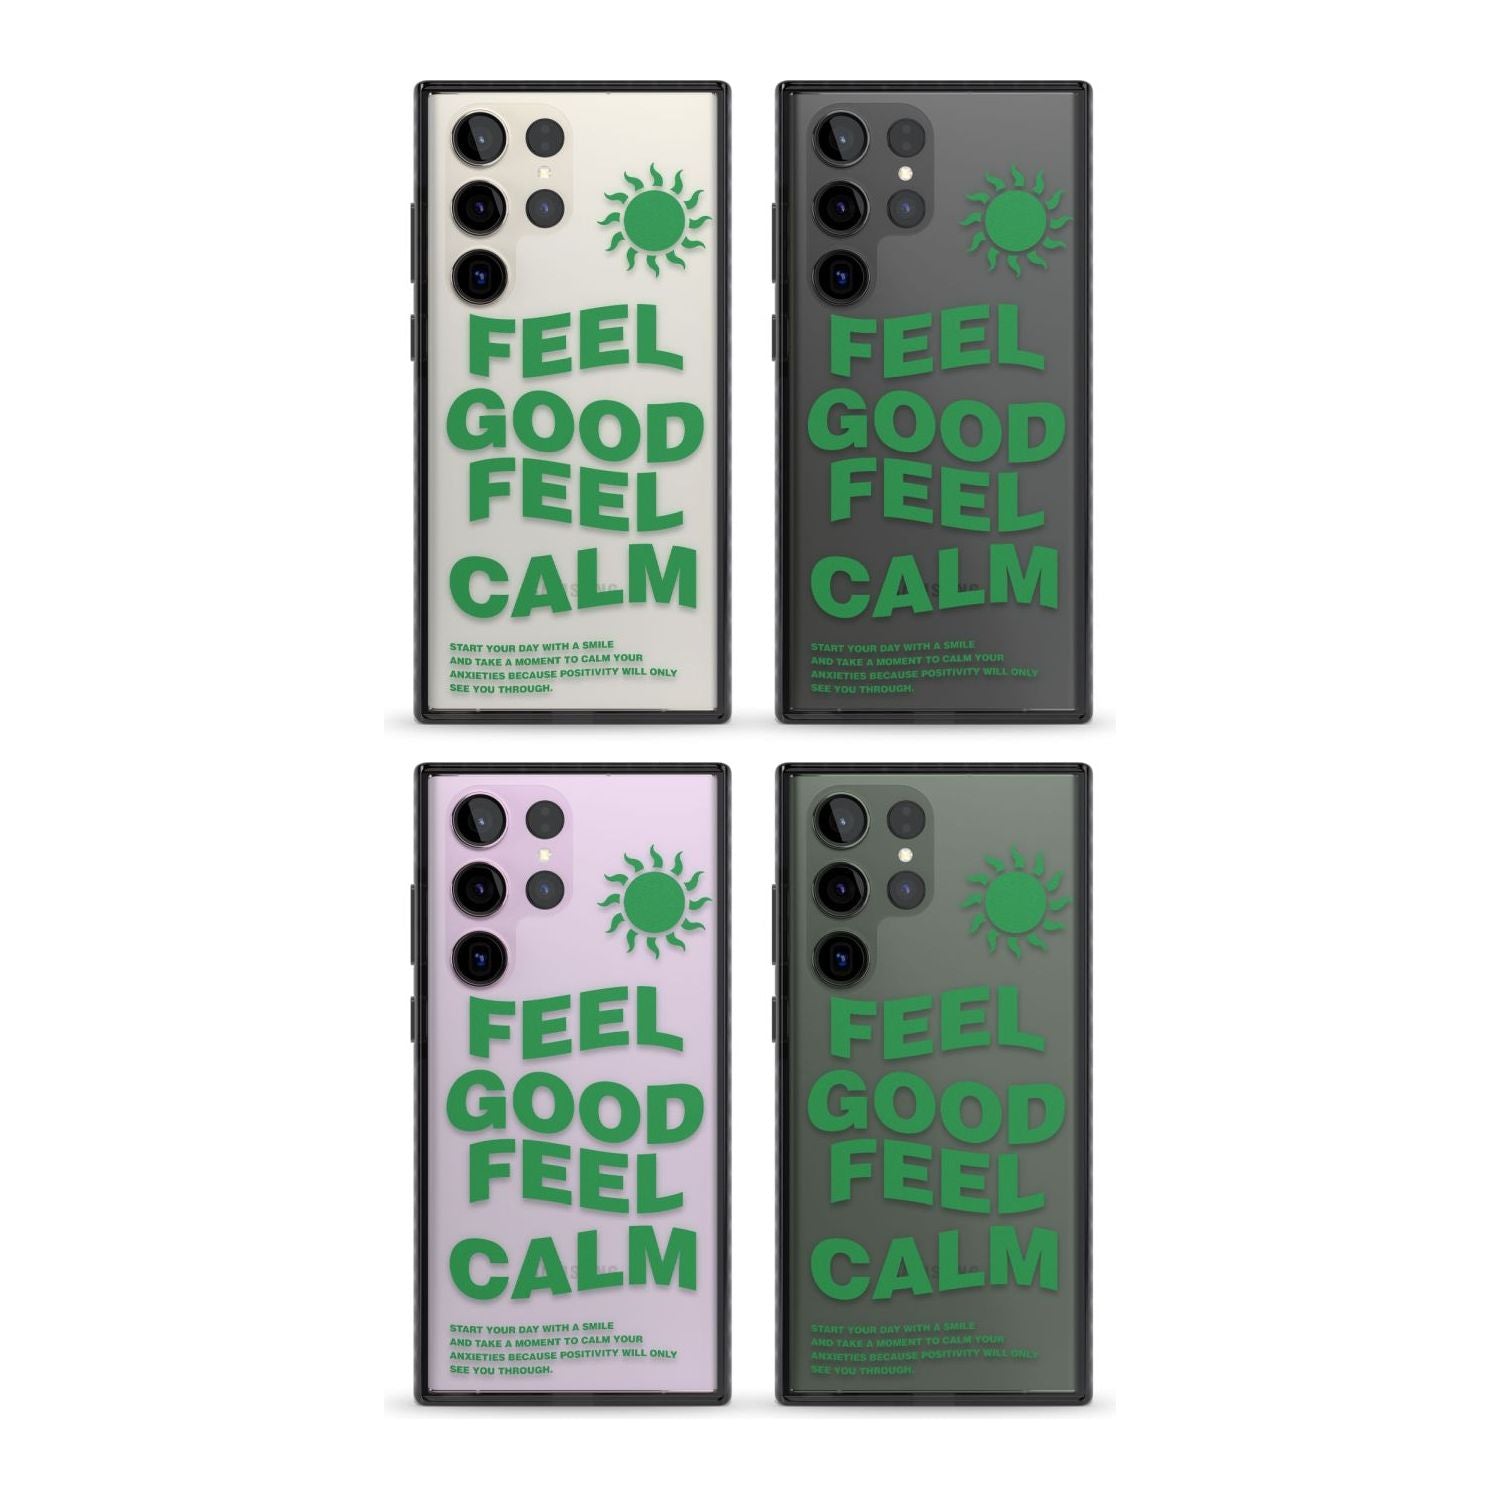 Feel Good Feel Calm (Green)